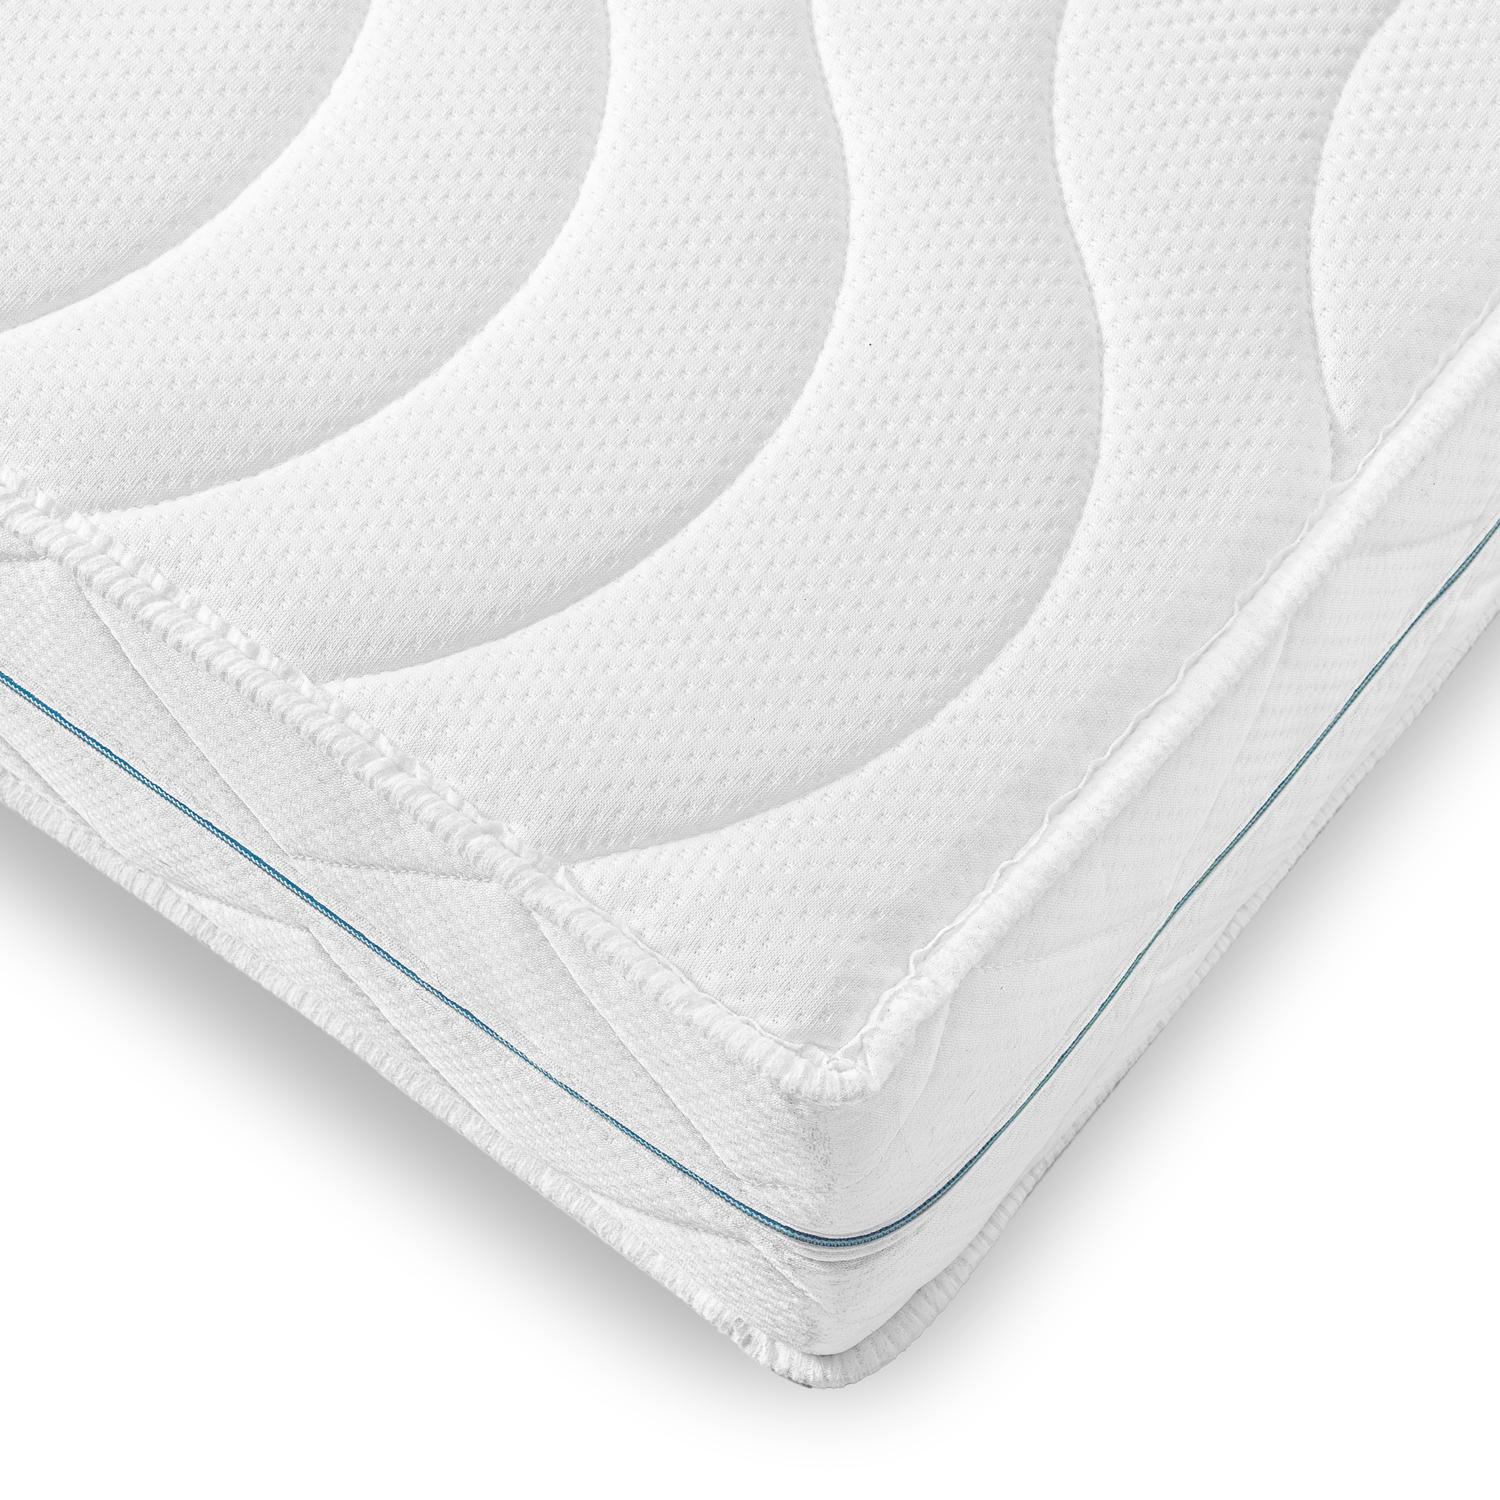 Supportho Premium yatak örtüsü 120 x 200 cm, yükseklik 18 cm